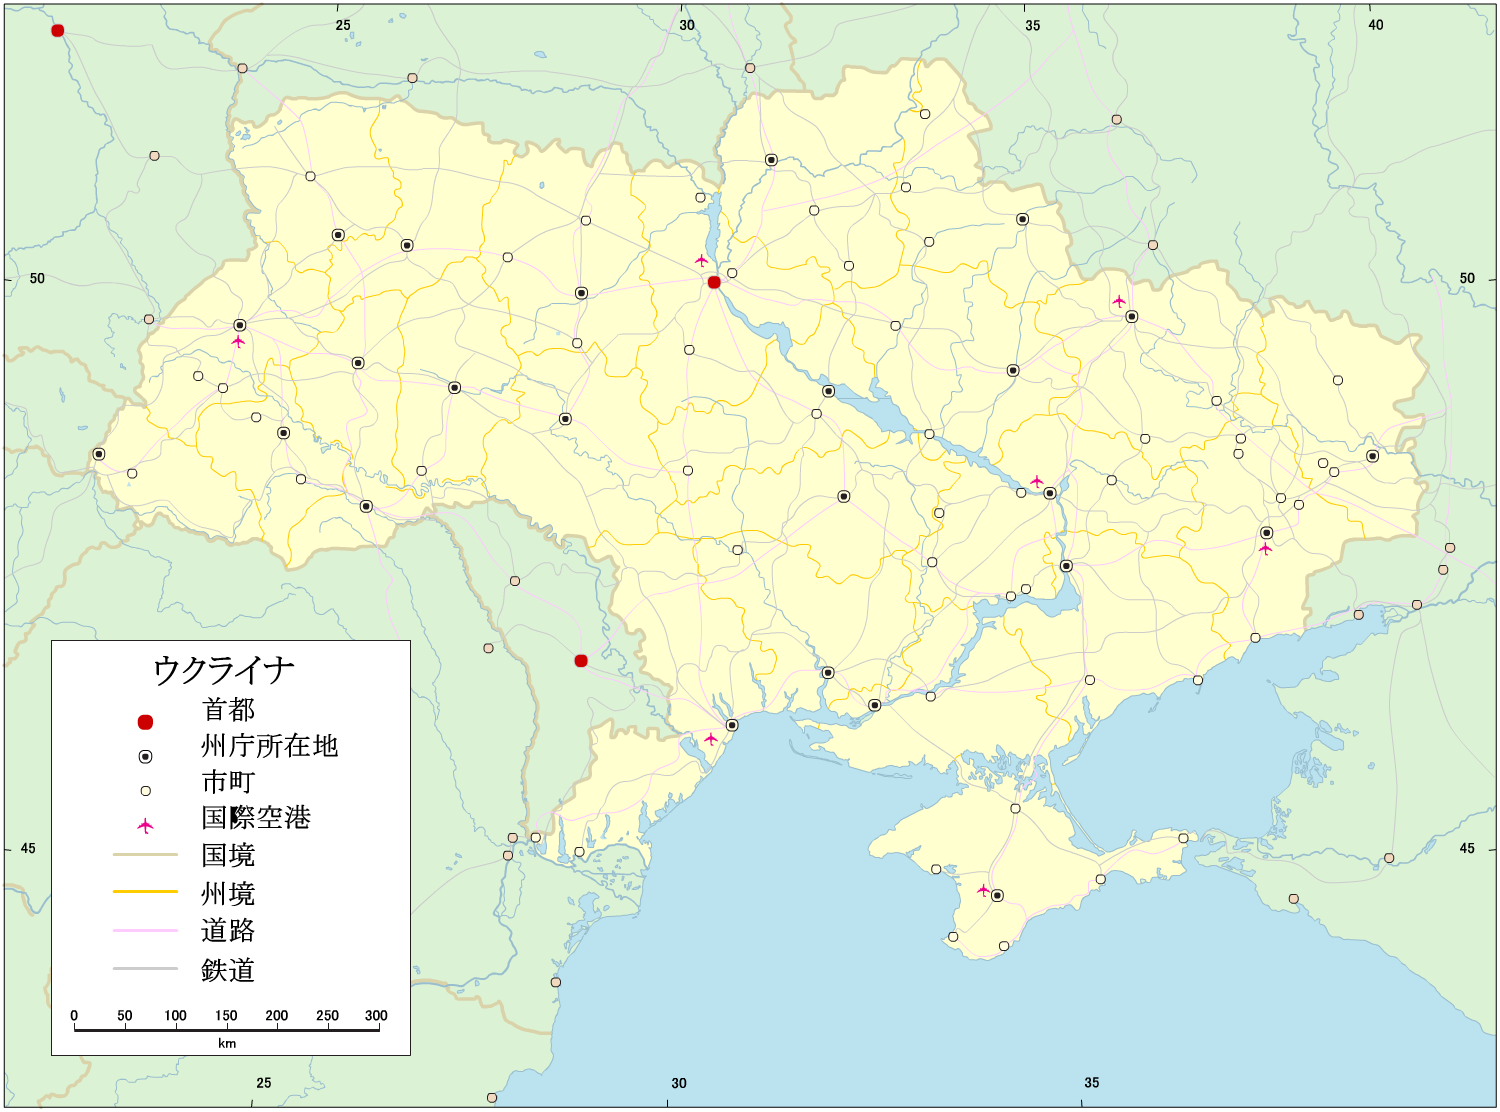 File:ウクライナの地図.png - Wikimedia Commons